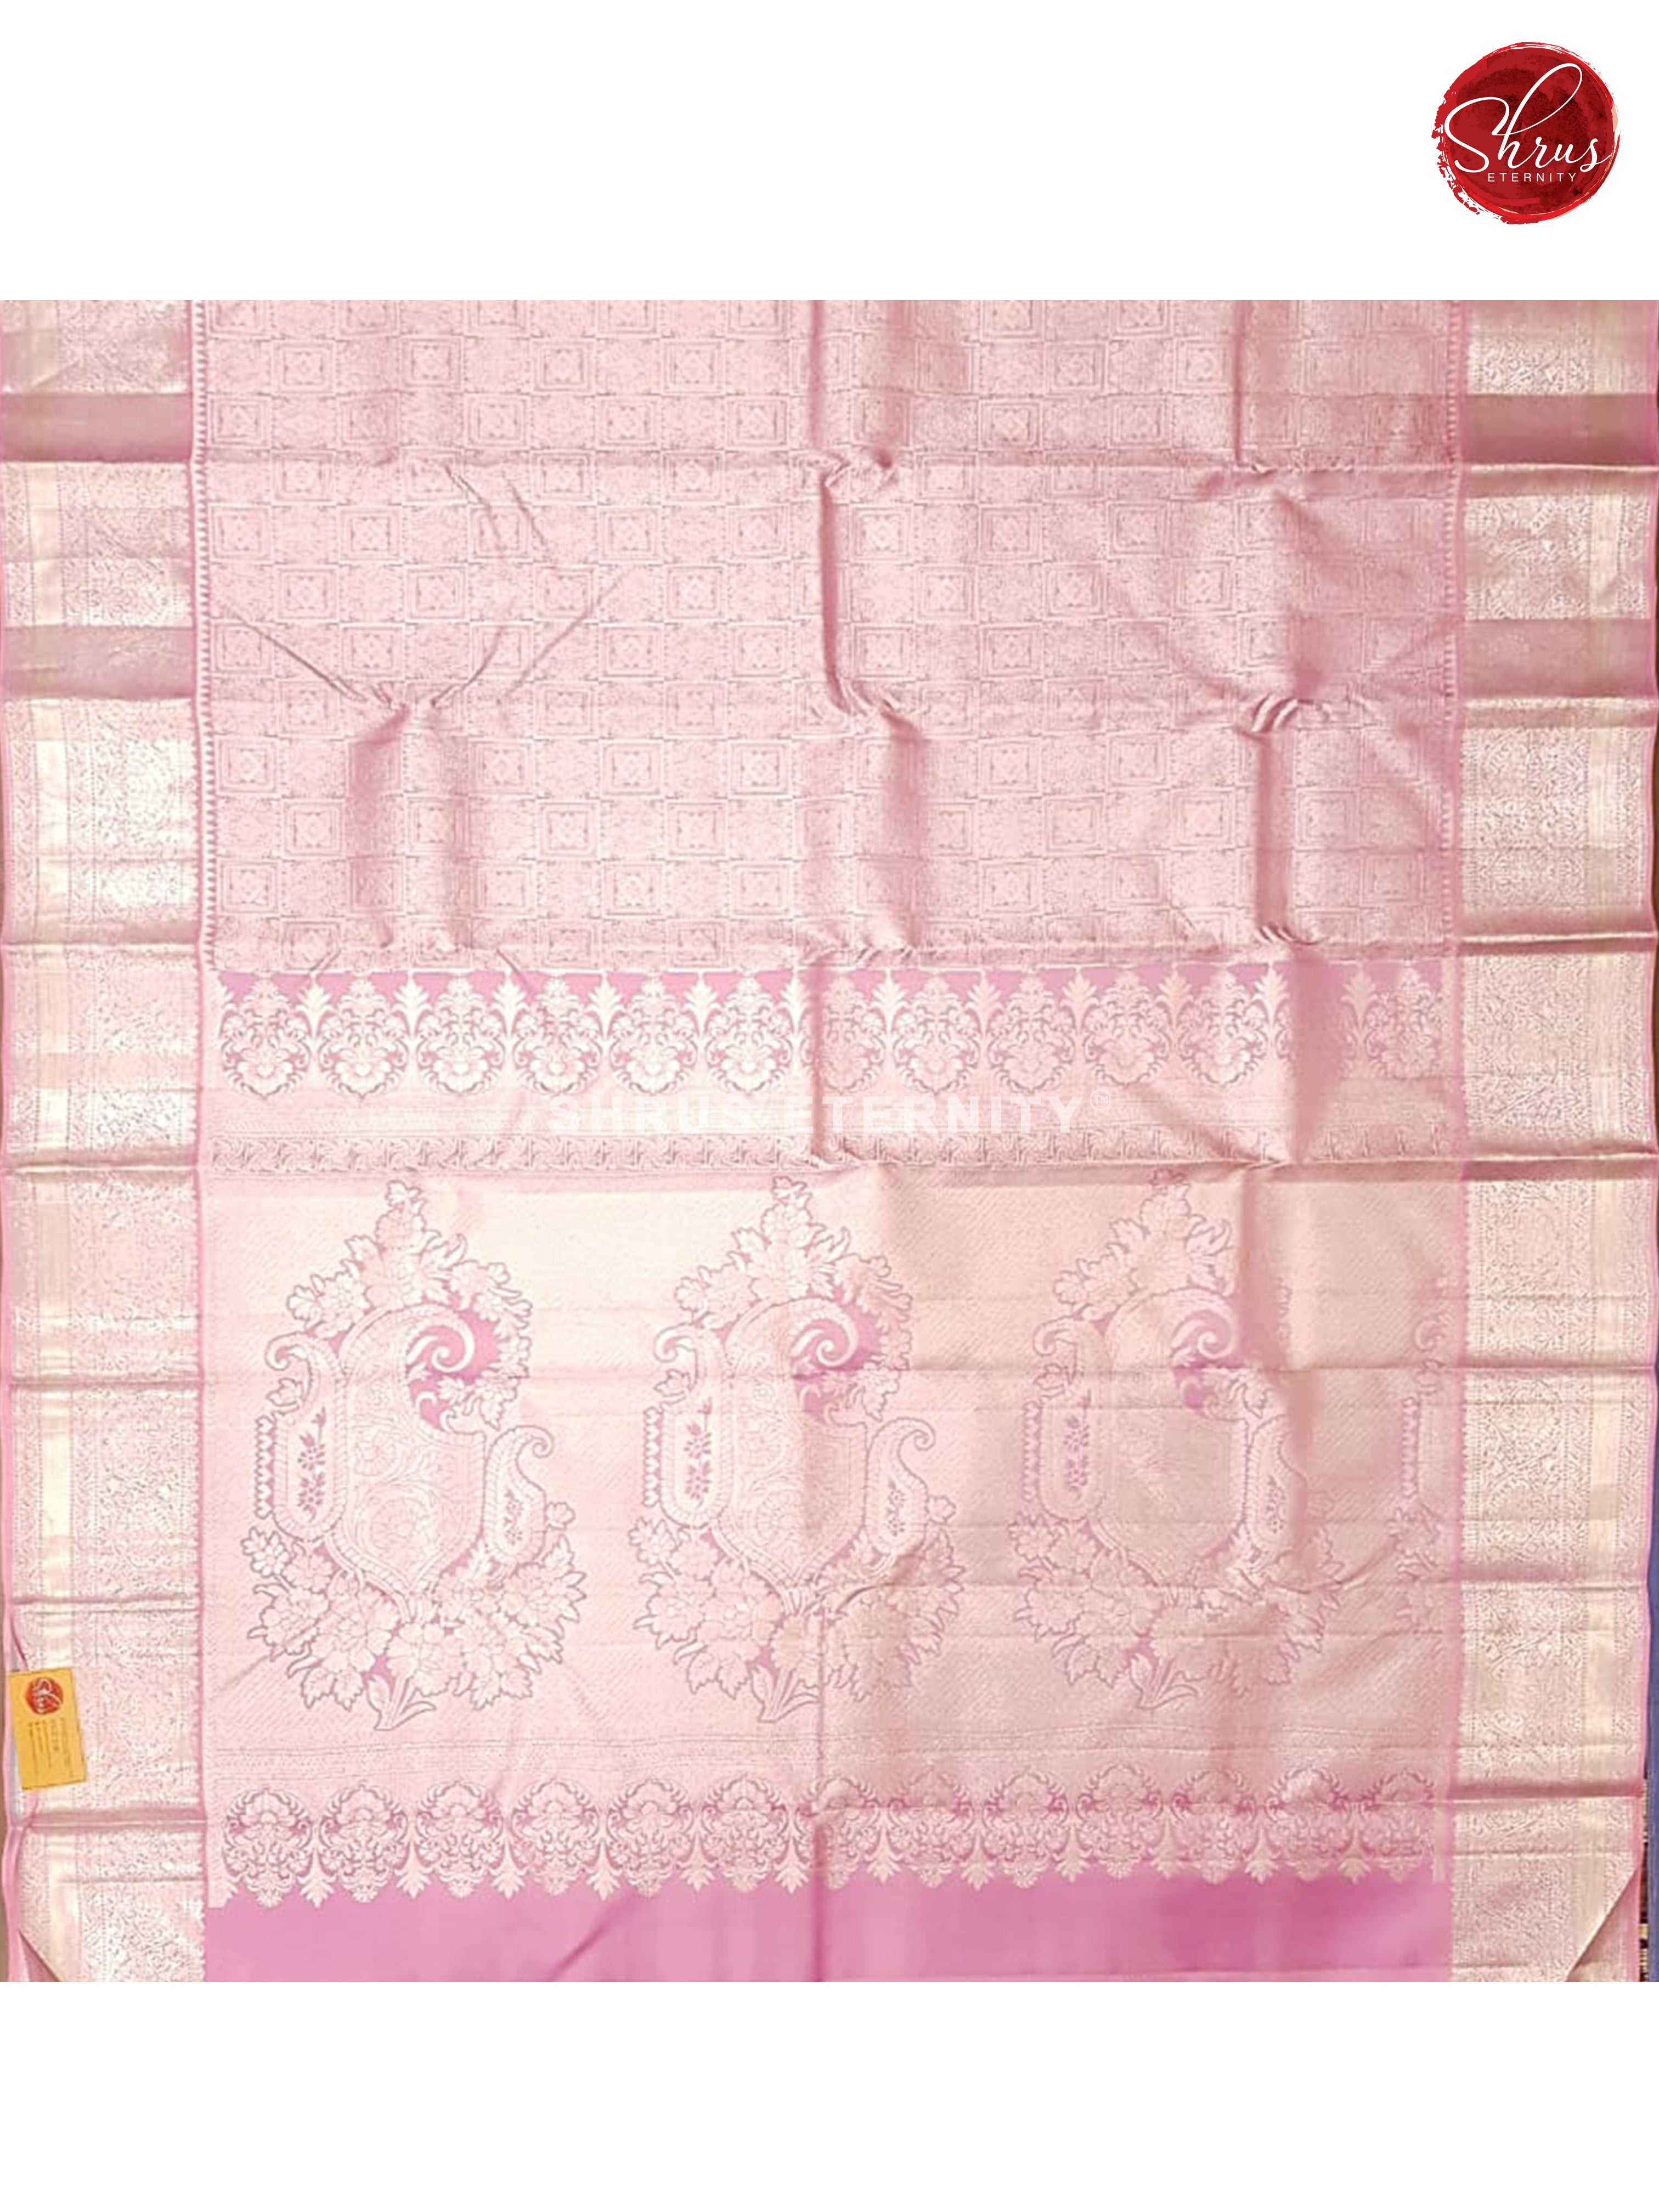 Baby Pink & Silver - Kanchipuram  Silk - Shop on ShrusEternity.com